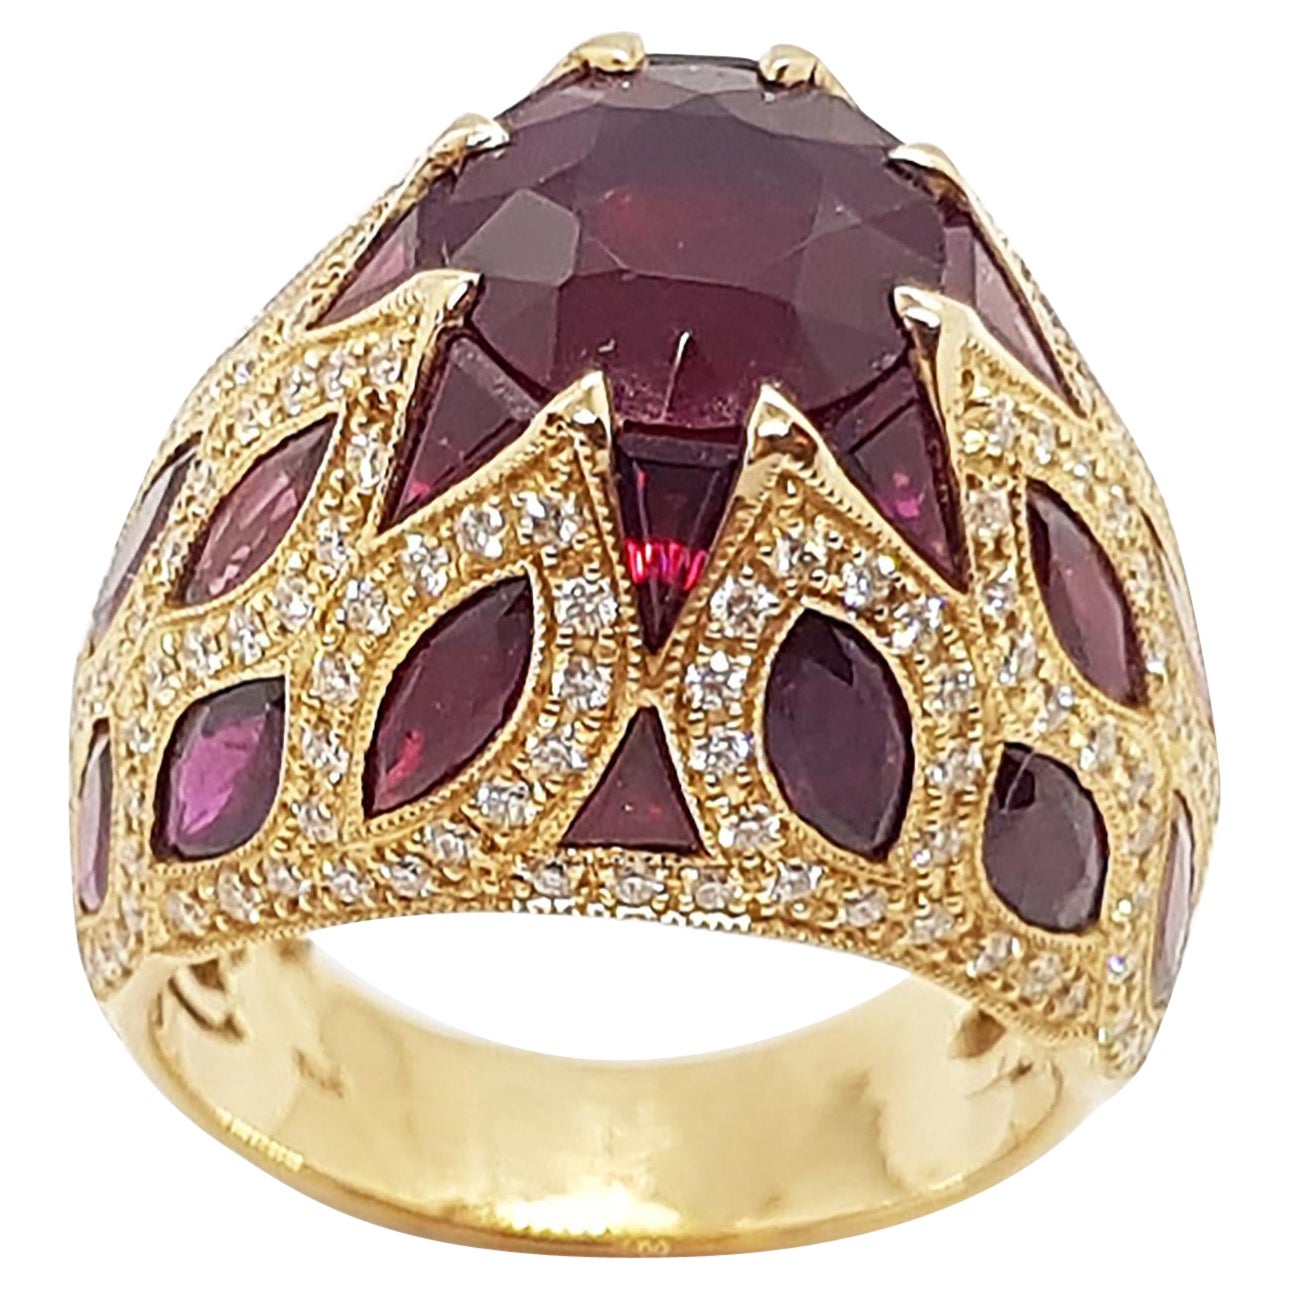 Ruby with Diamond Ring set in 18 Karat Rose Gold Settings